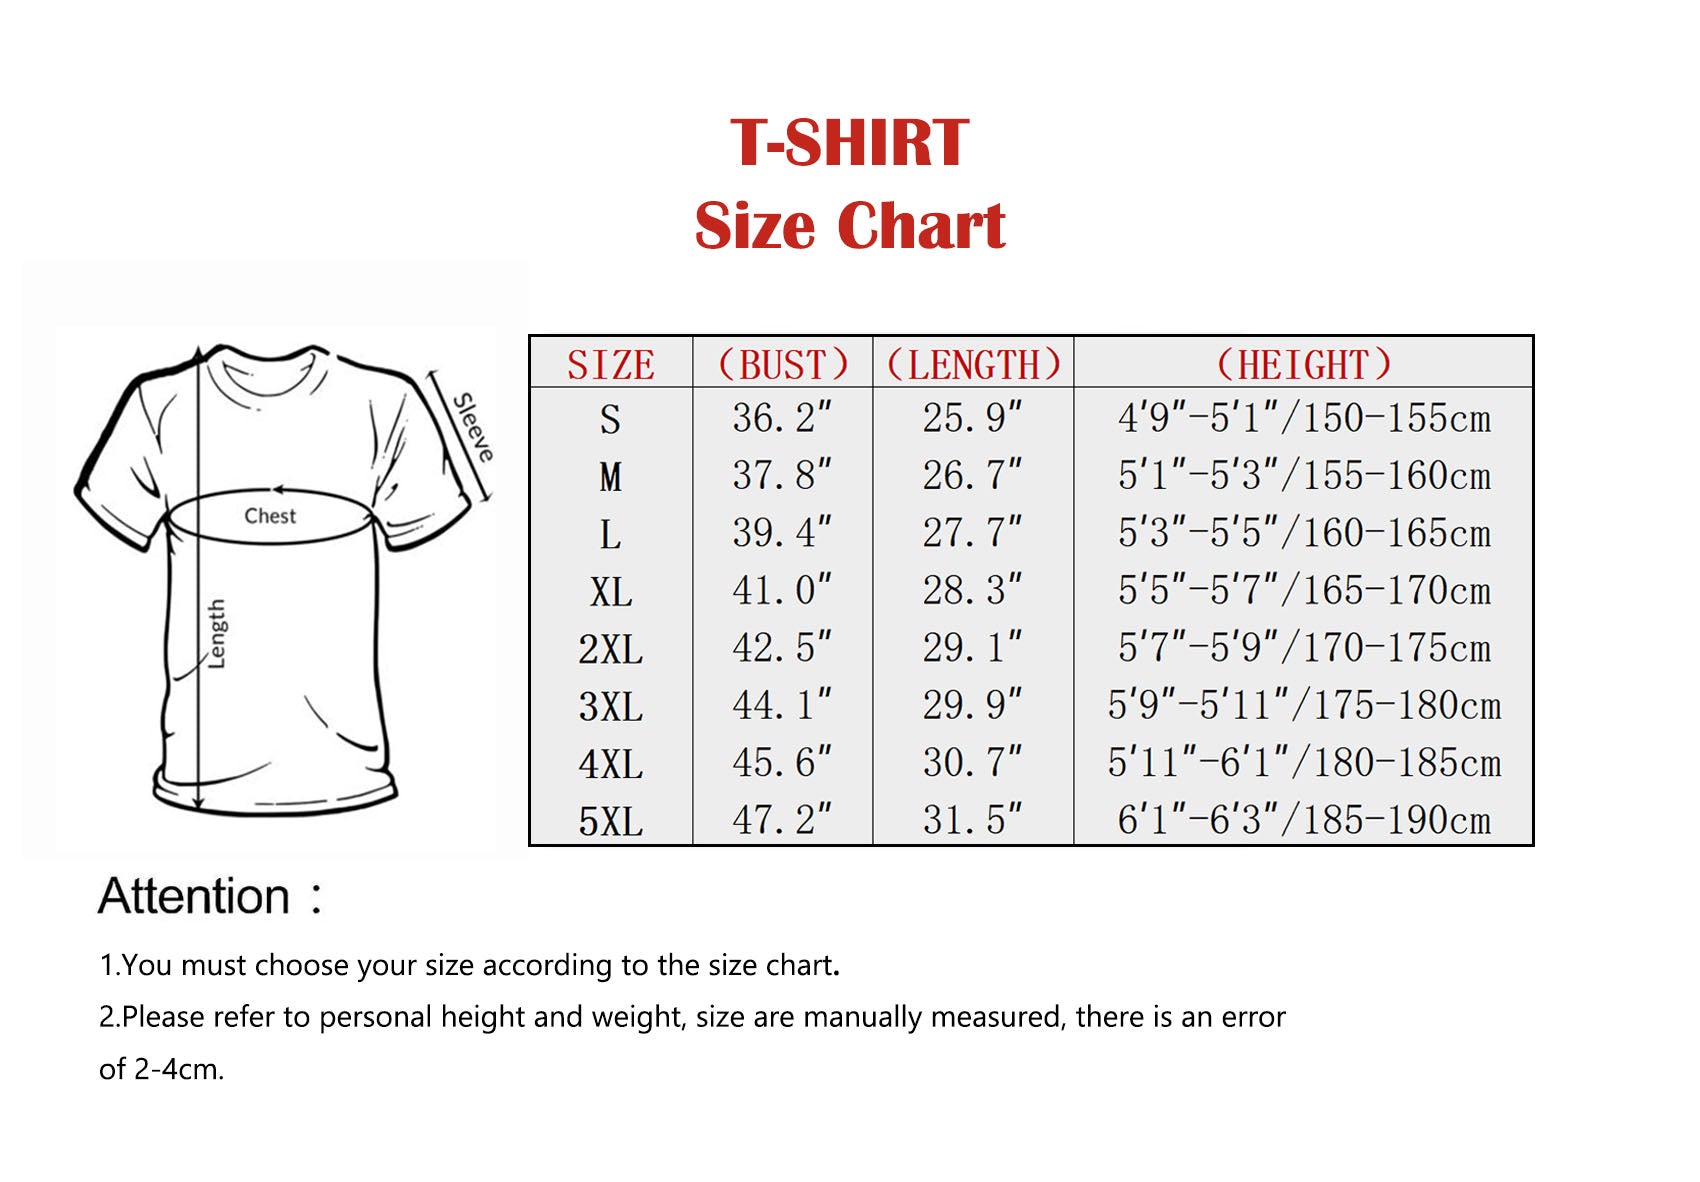 HOT NHL Vancouver Canucks Special Design For Mother's Day Tumbler •  Shirtnation - Shop trending t-shirts online in US